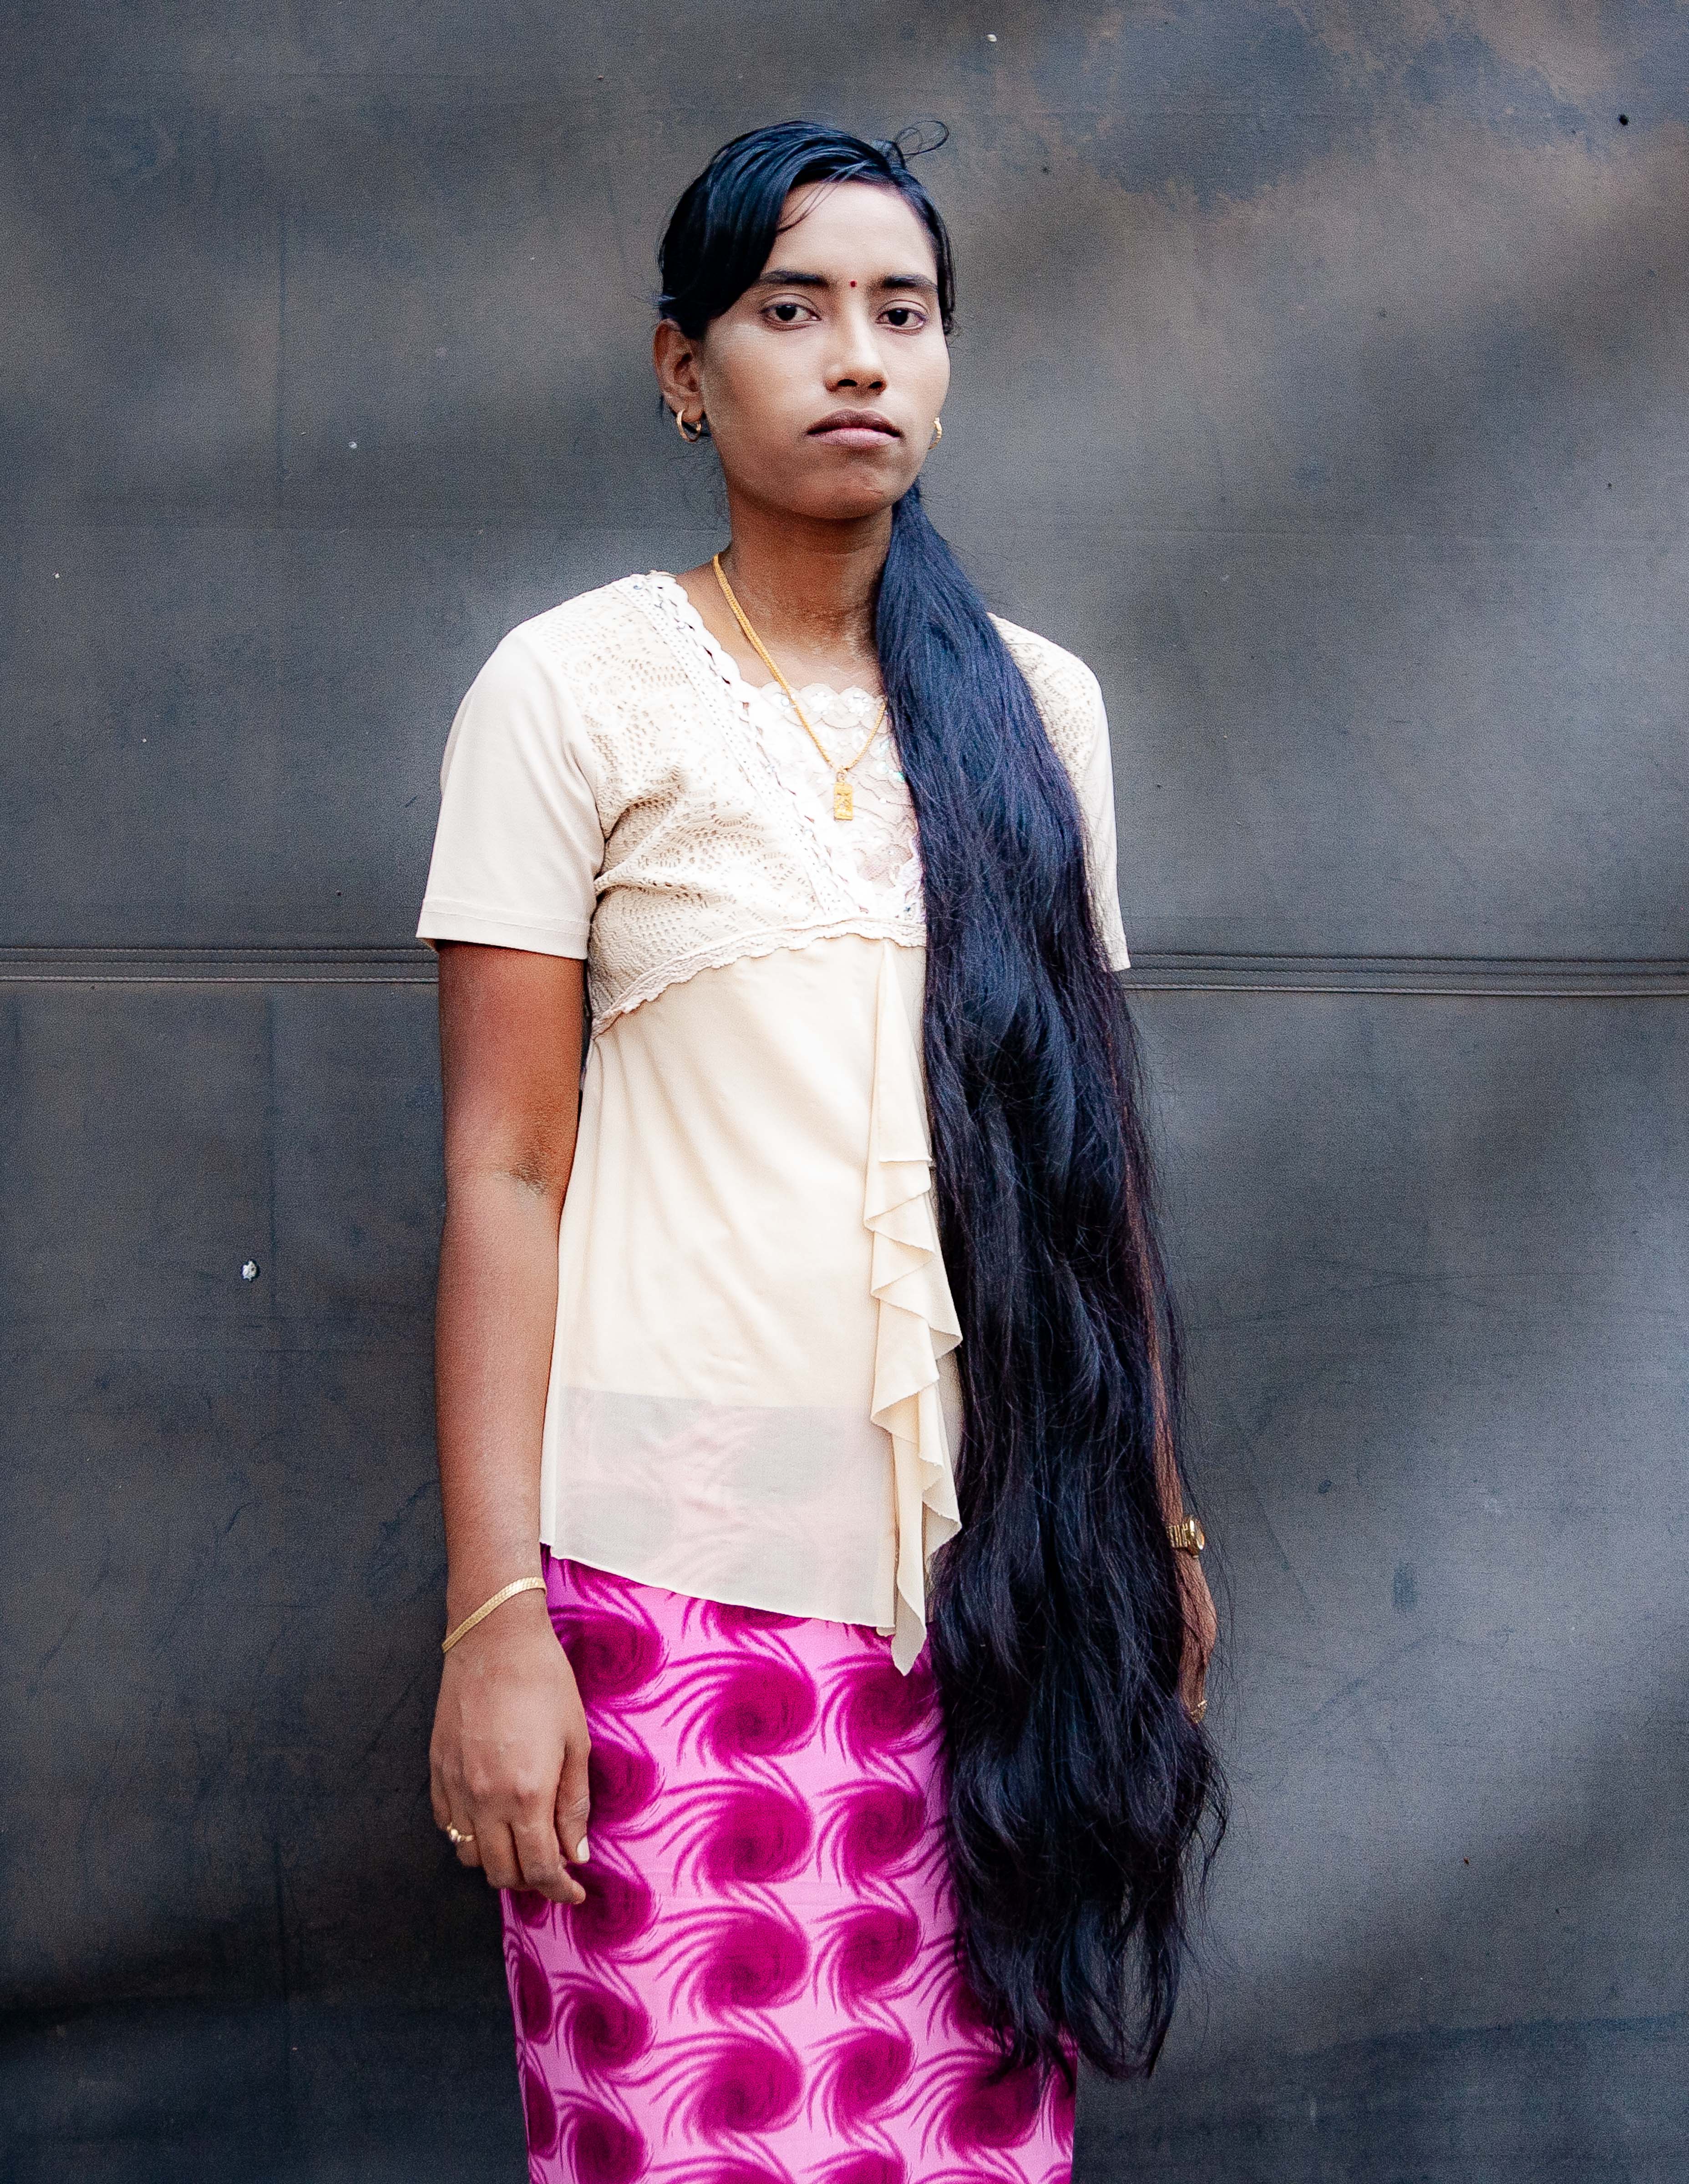 Myanmar, Kachin Prov, Girl With Long Hair, 2009, IMG 3052